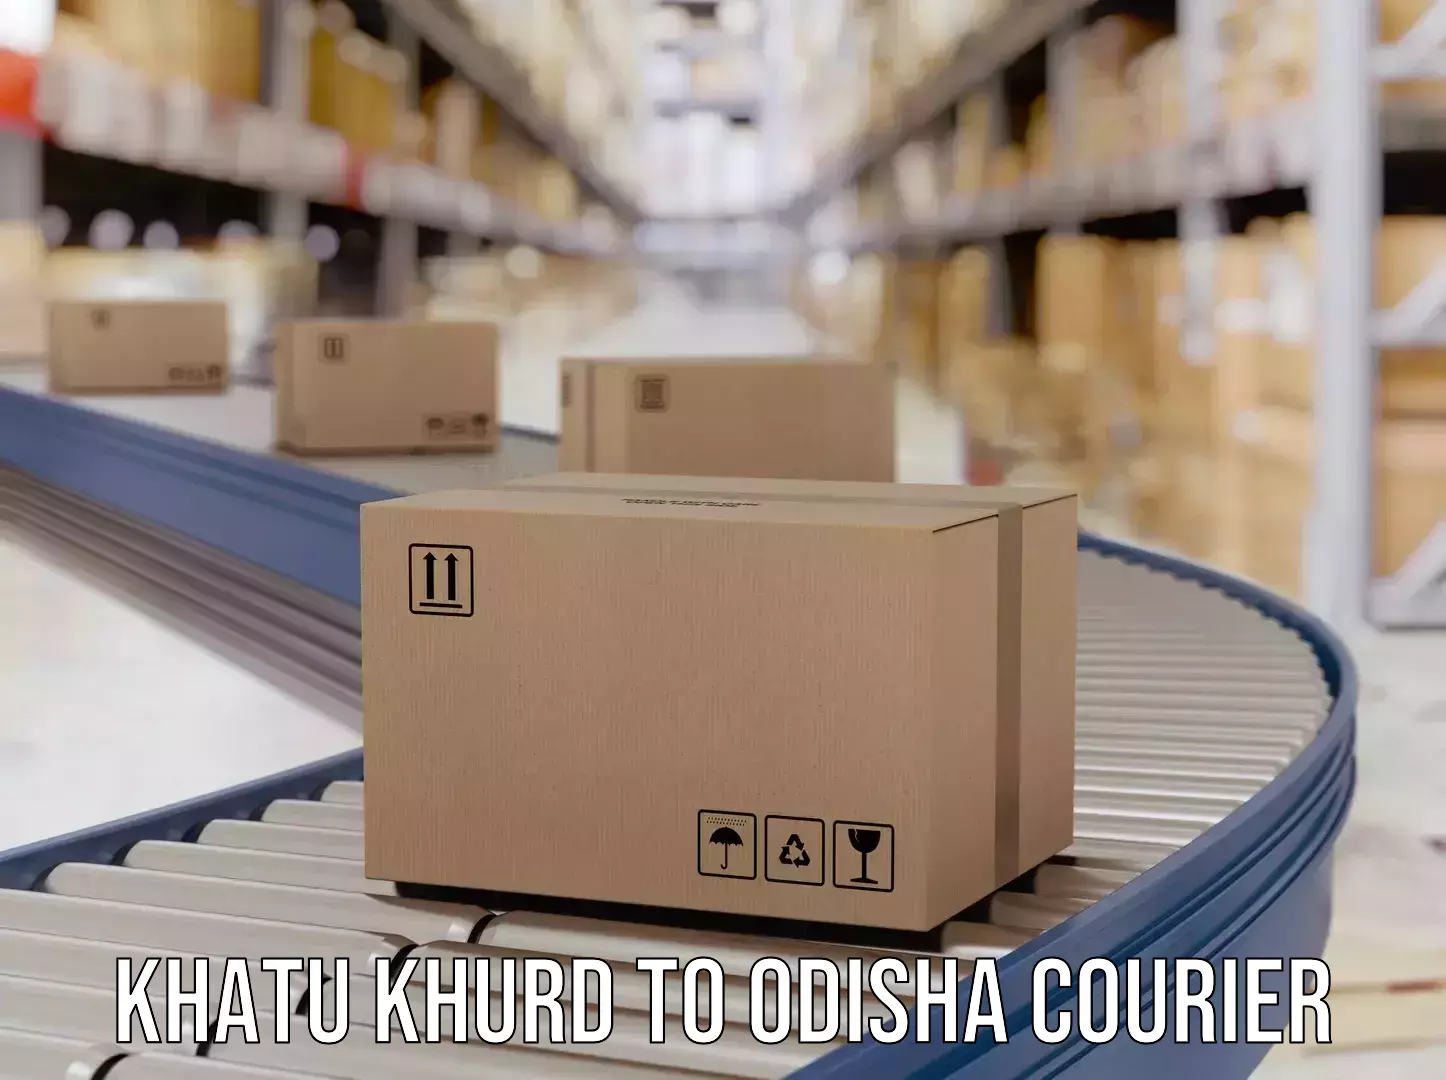 International parcel service Khatu Khurd to Mathili